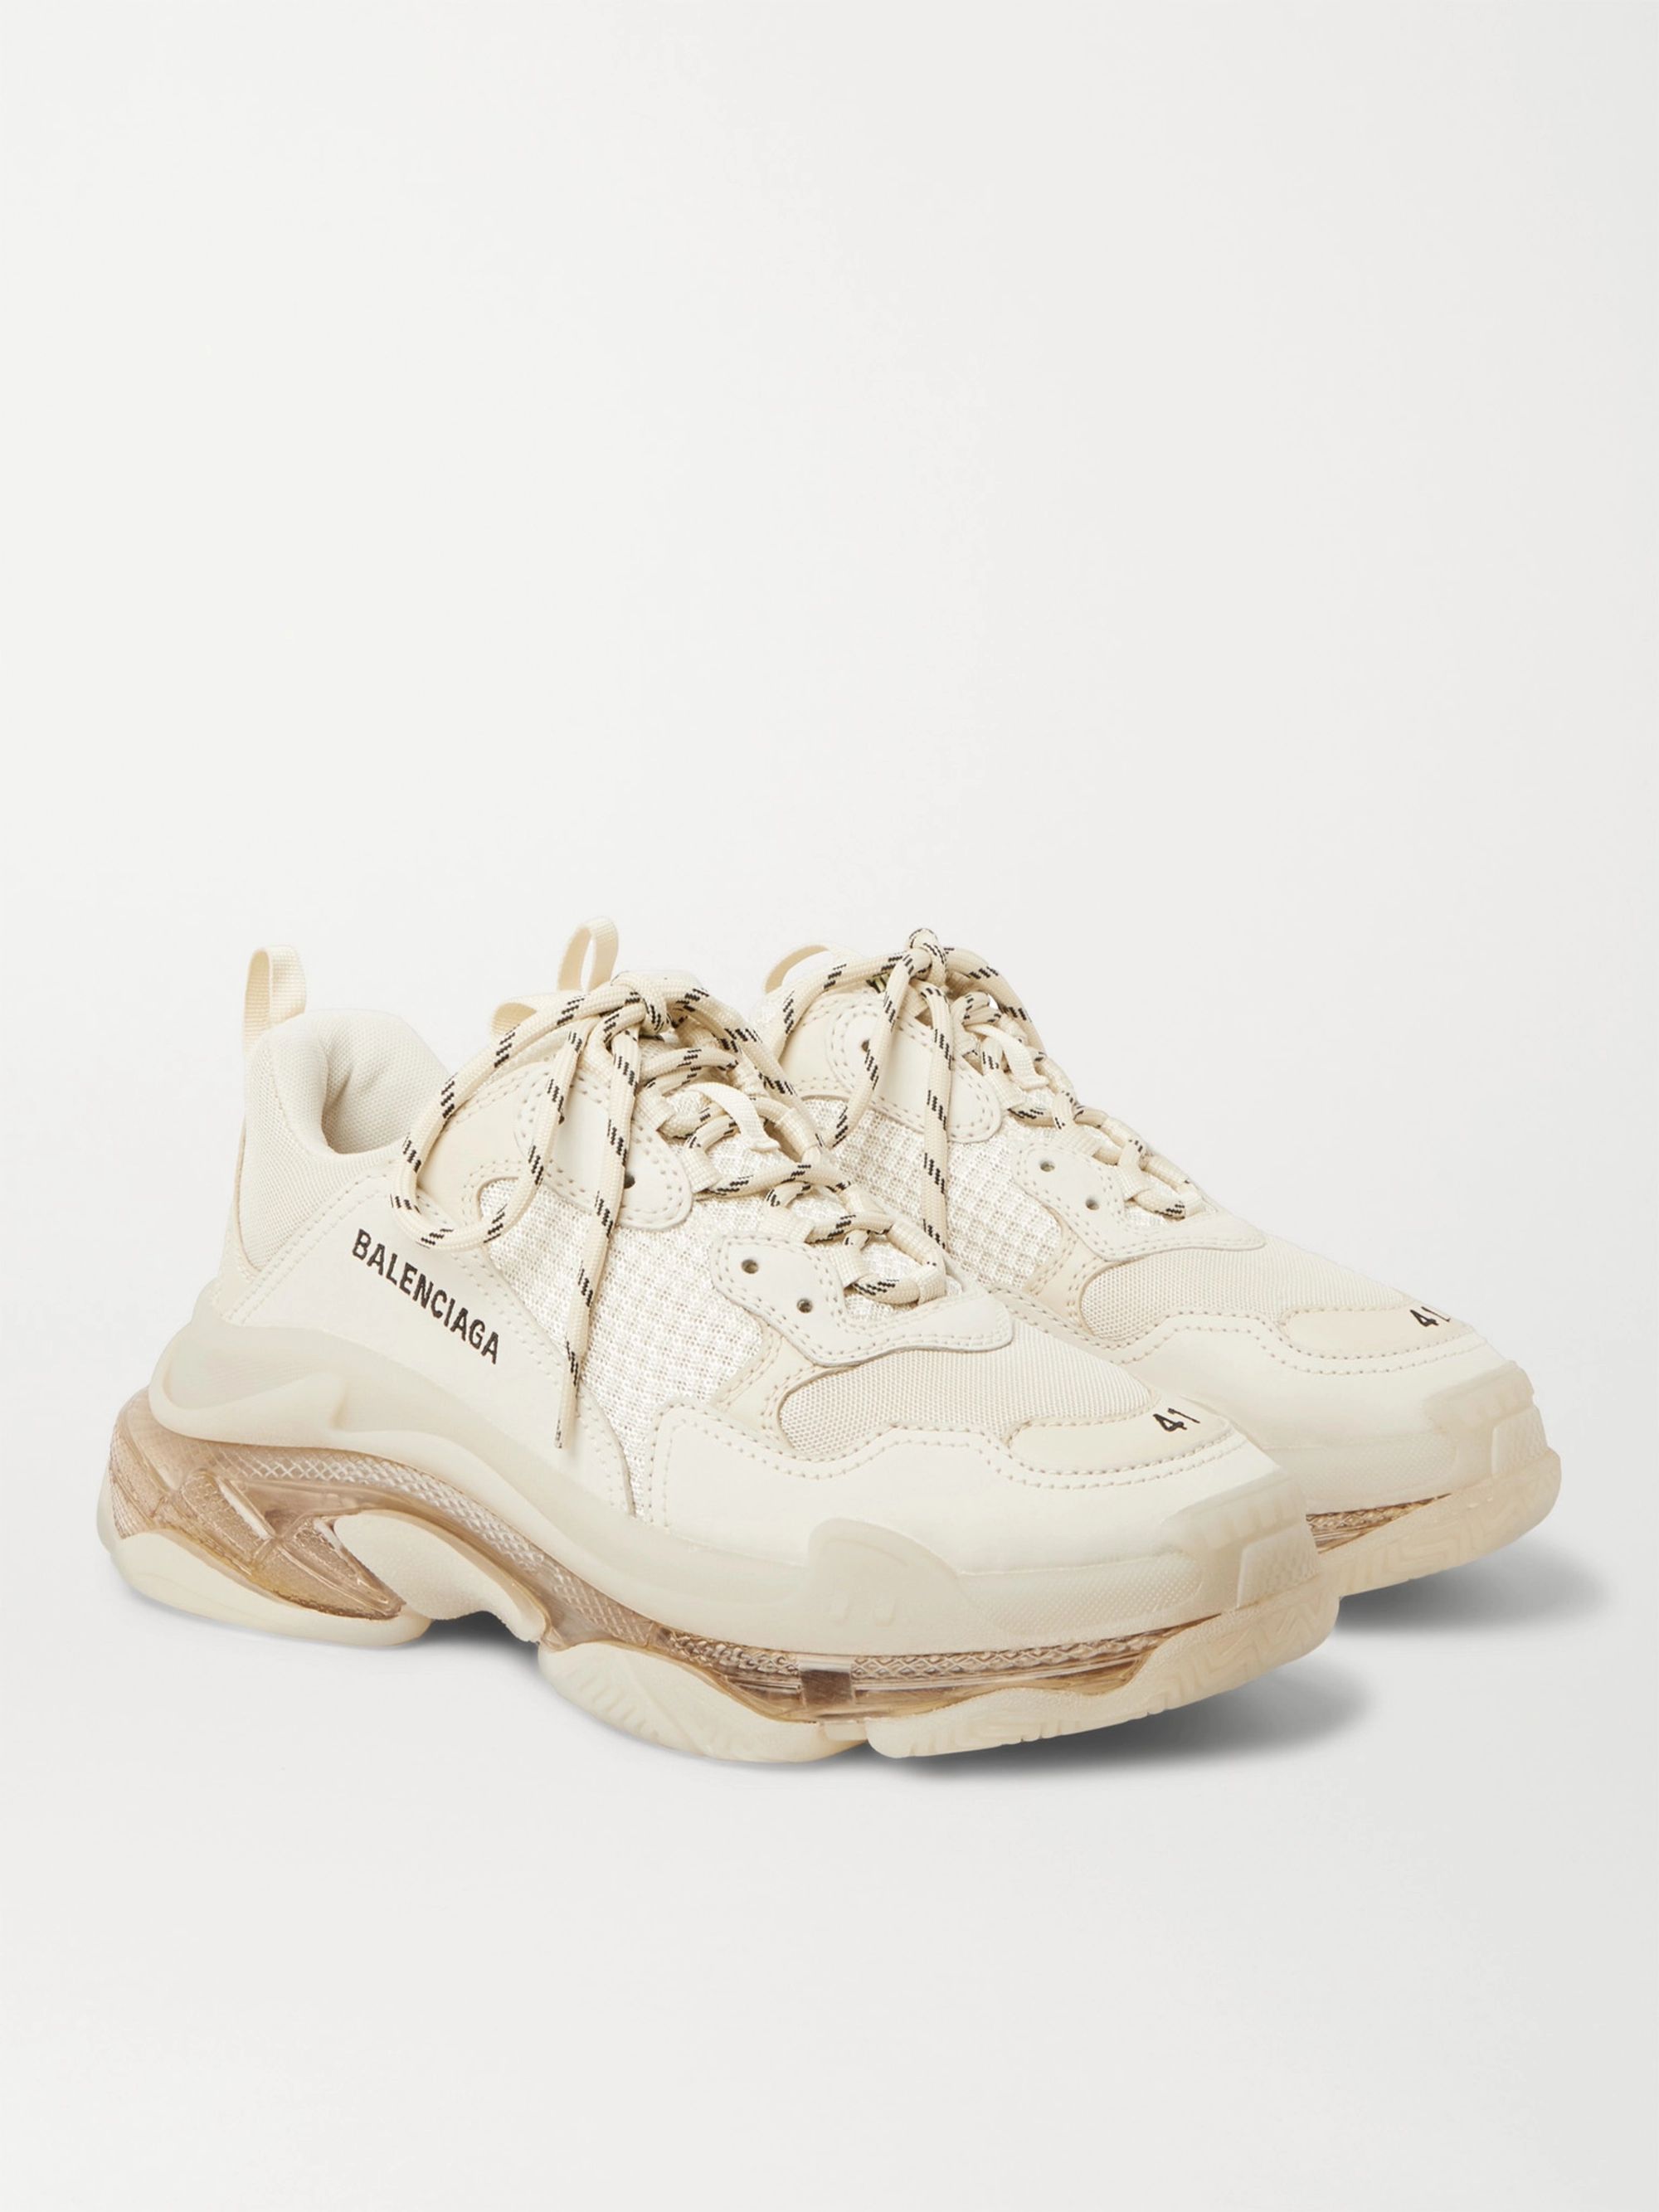 Balenciaga Triple S Clear Sole Sneaker White Size 36 eBay